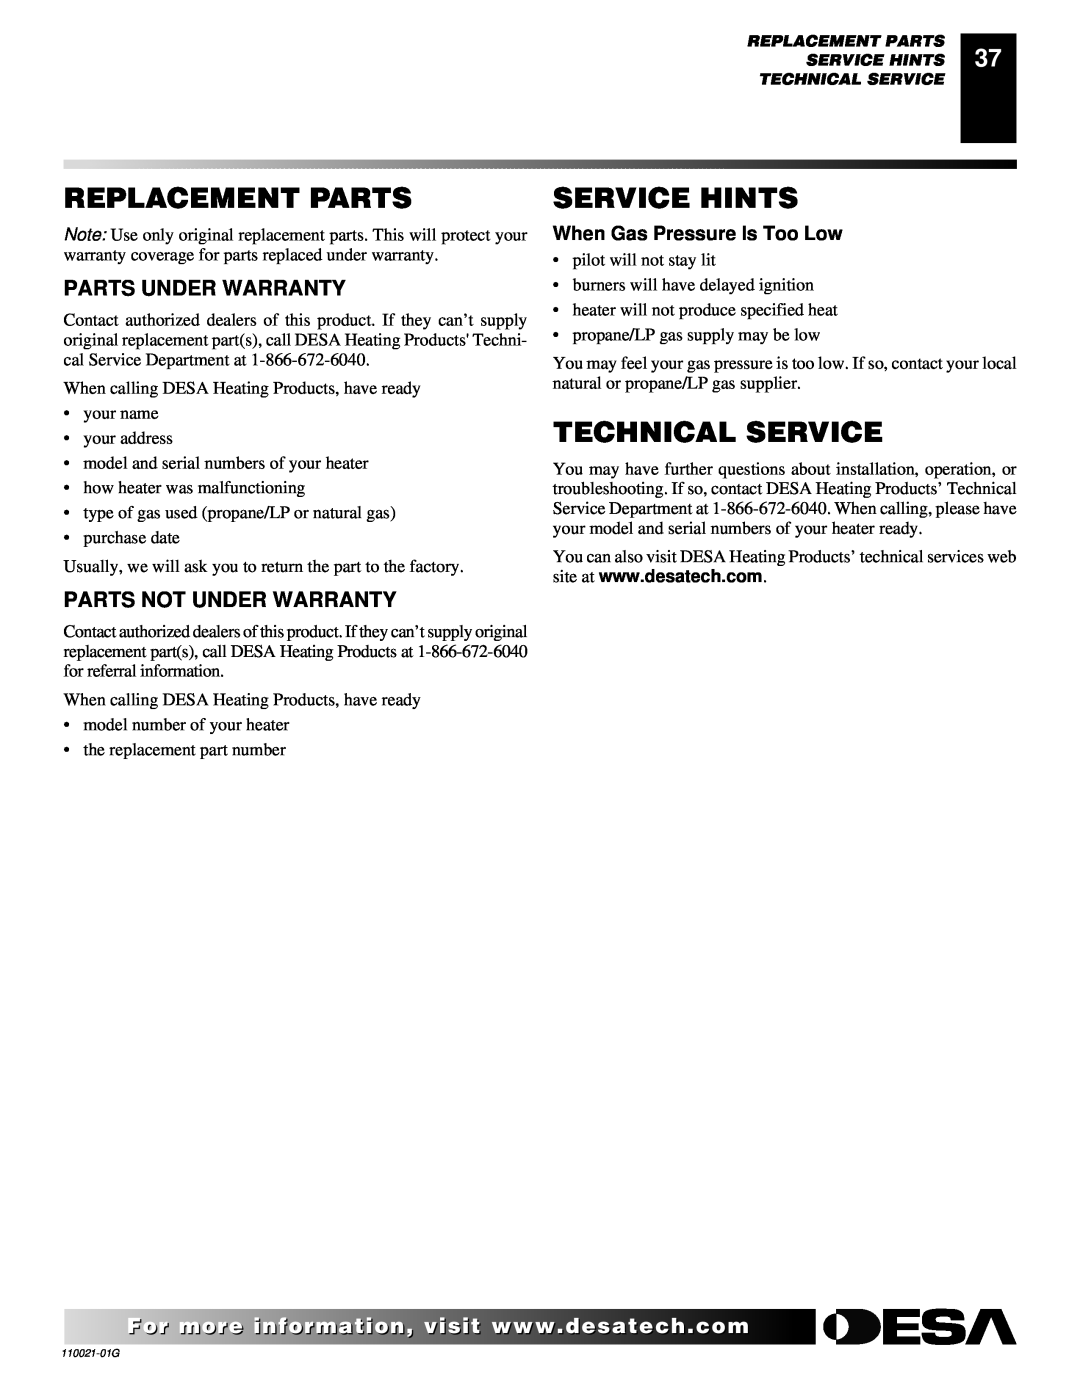 Desa CSG3930NR Replacement Parts, Service Hints, Technical Service, Parts Under Warranty, Parts Not Under Warranty 